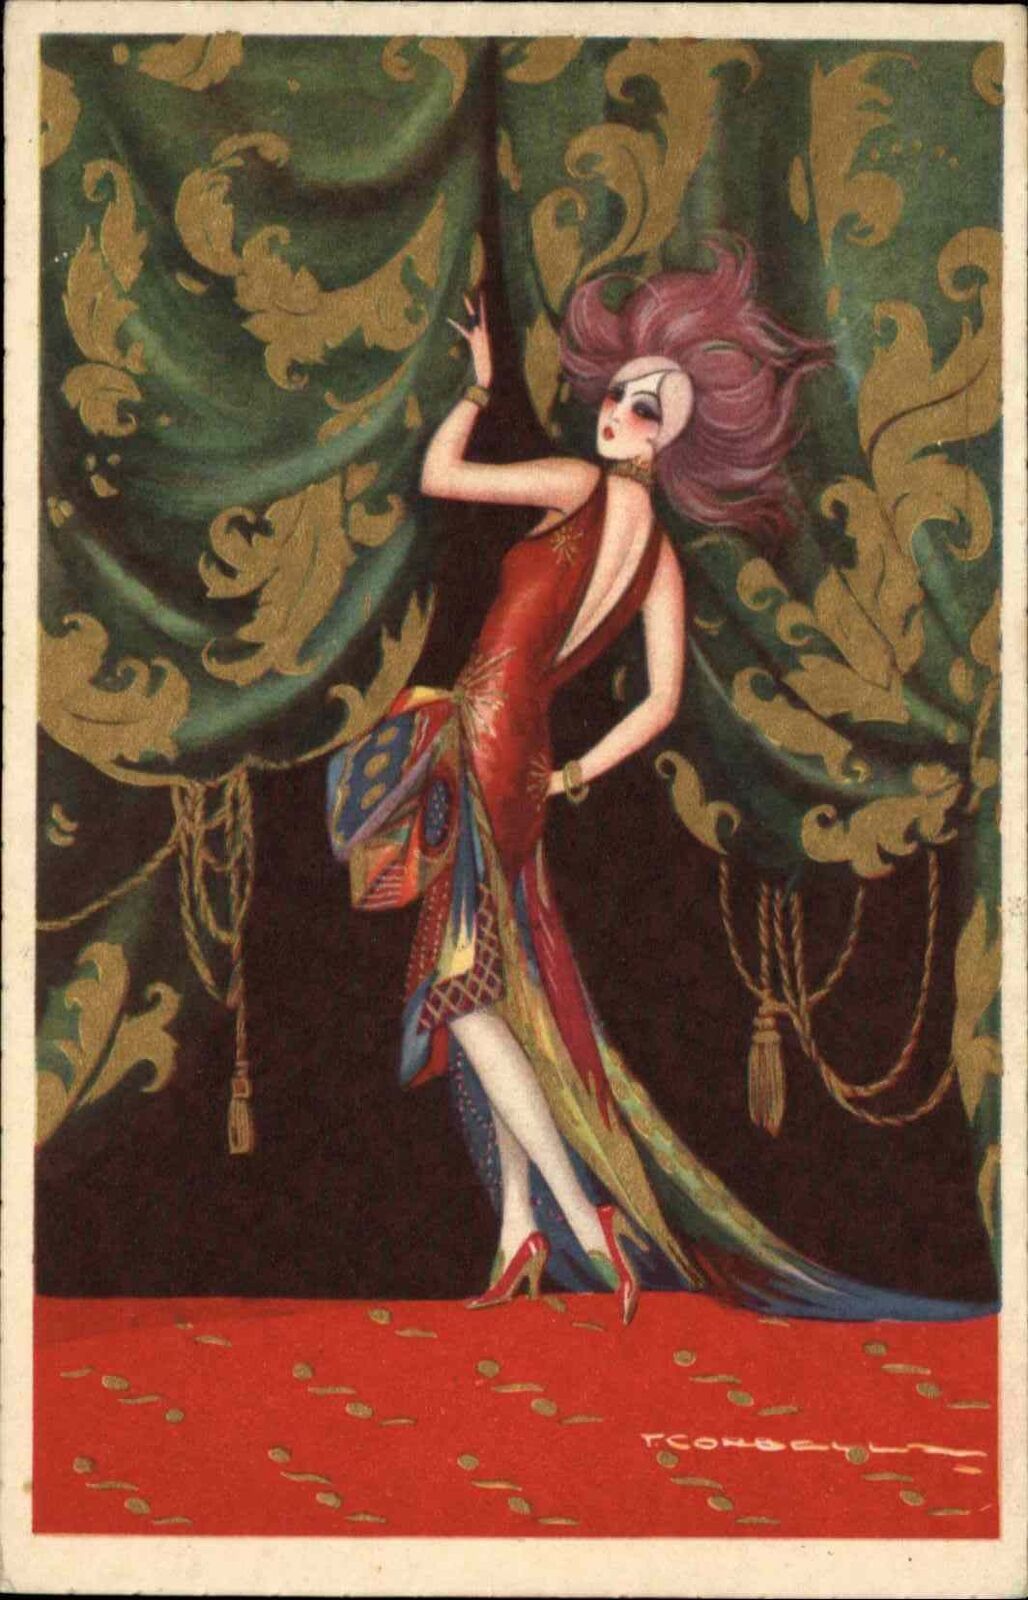 Beautiful Woman Art Deco Peacock-Like Dress Curtains CORBELLA c1920s Postcard